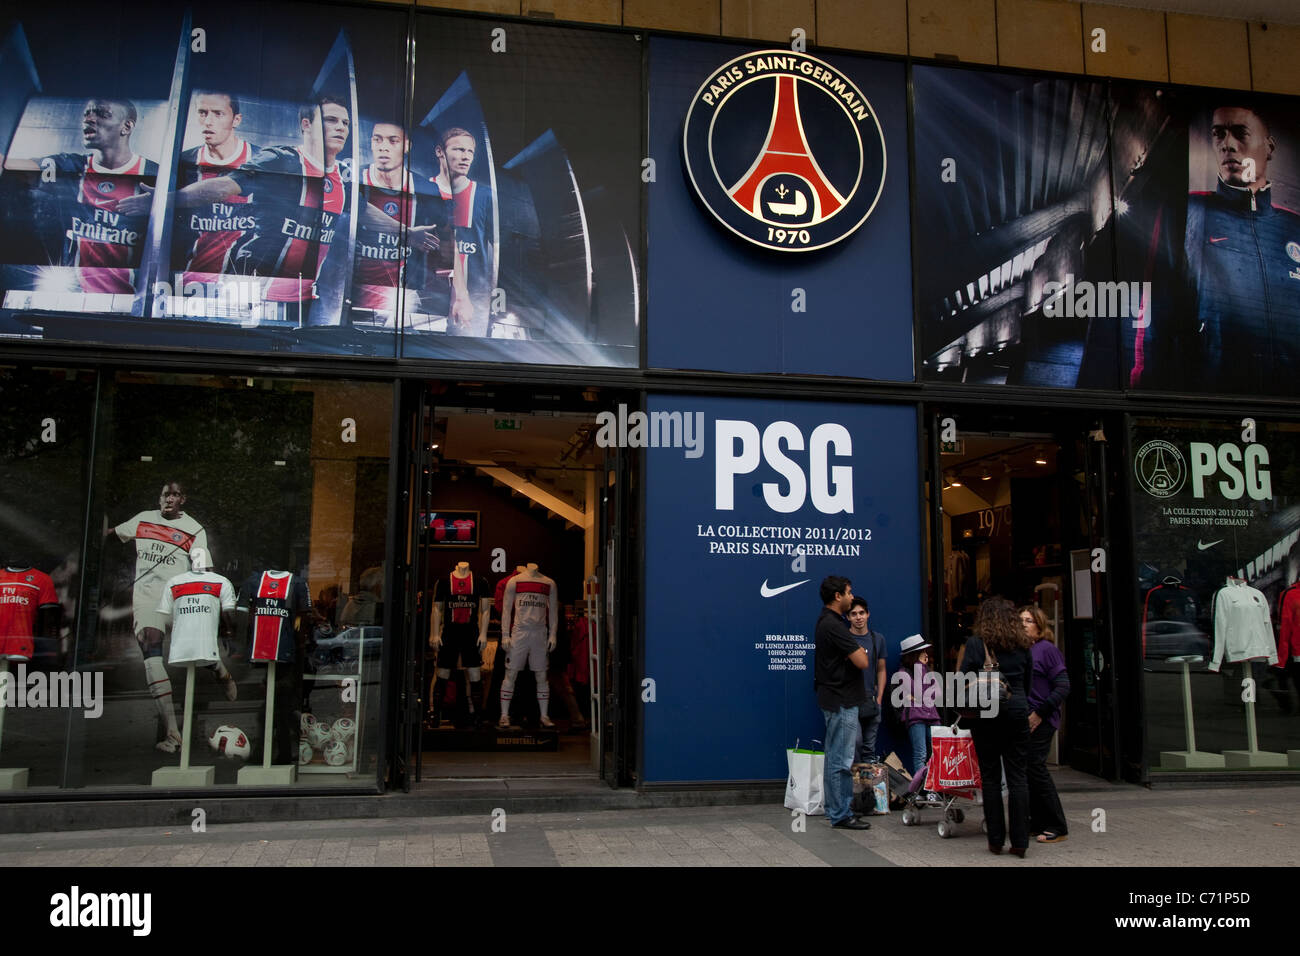 Paris Saint Germain Football Club Shop, Champs Elysees, Paris, France